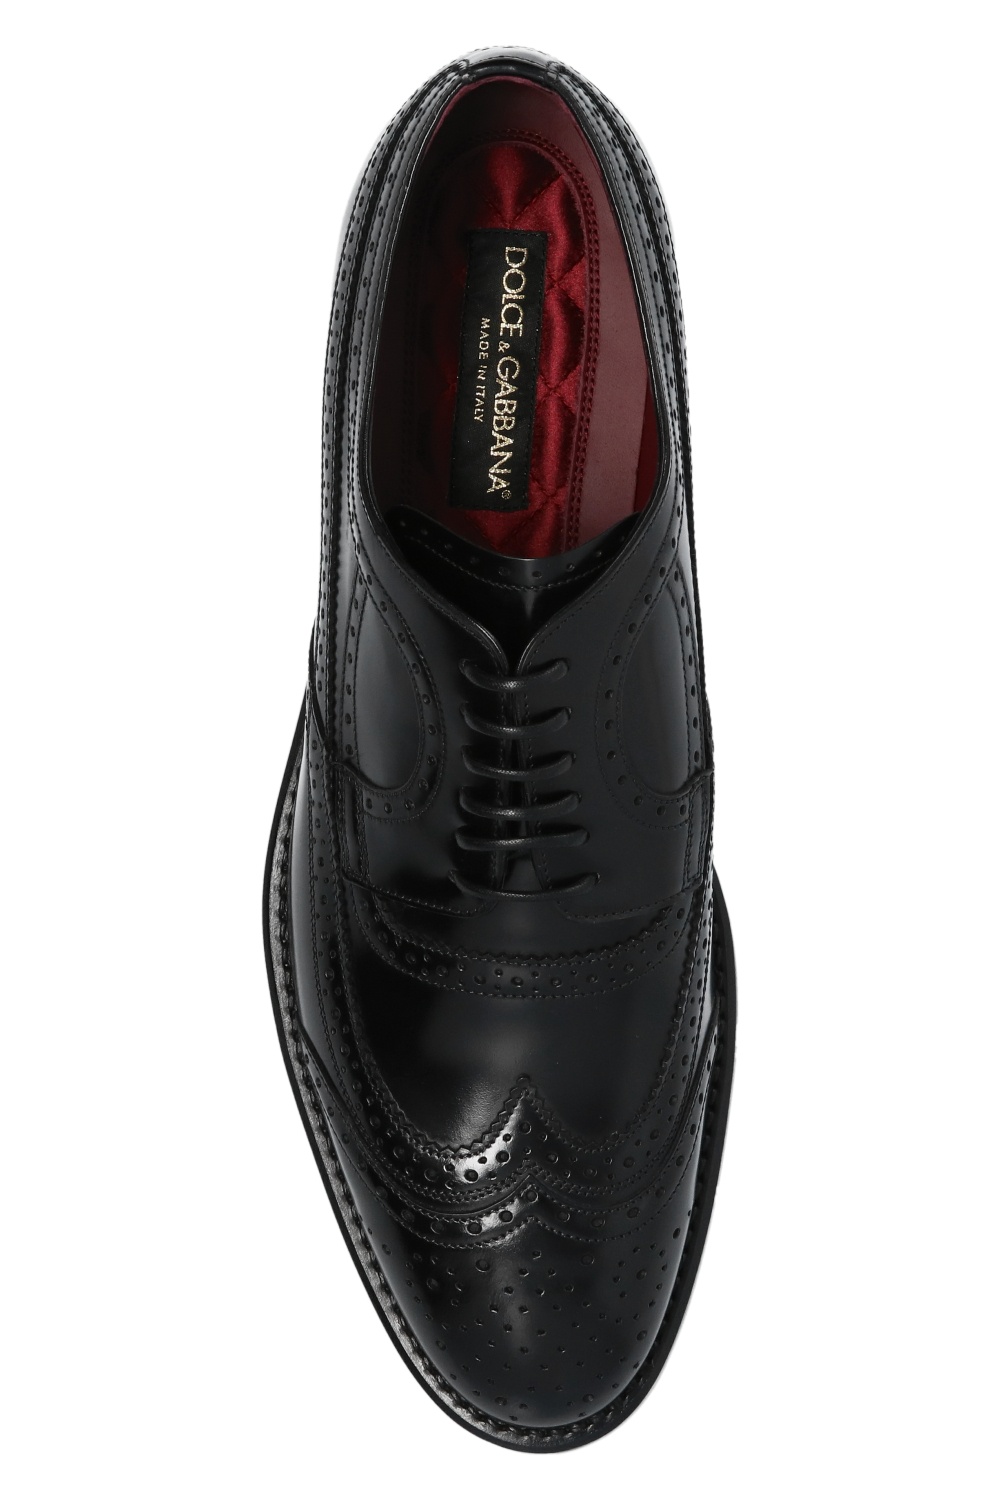 Dolce & Gabbana Derby shoes | Men's Shoes | Vitkac